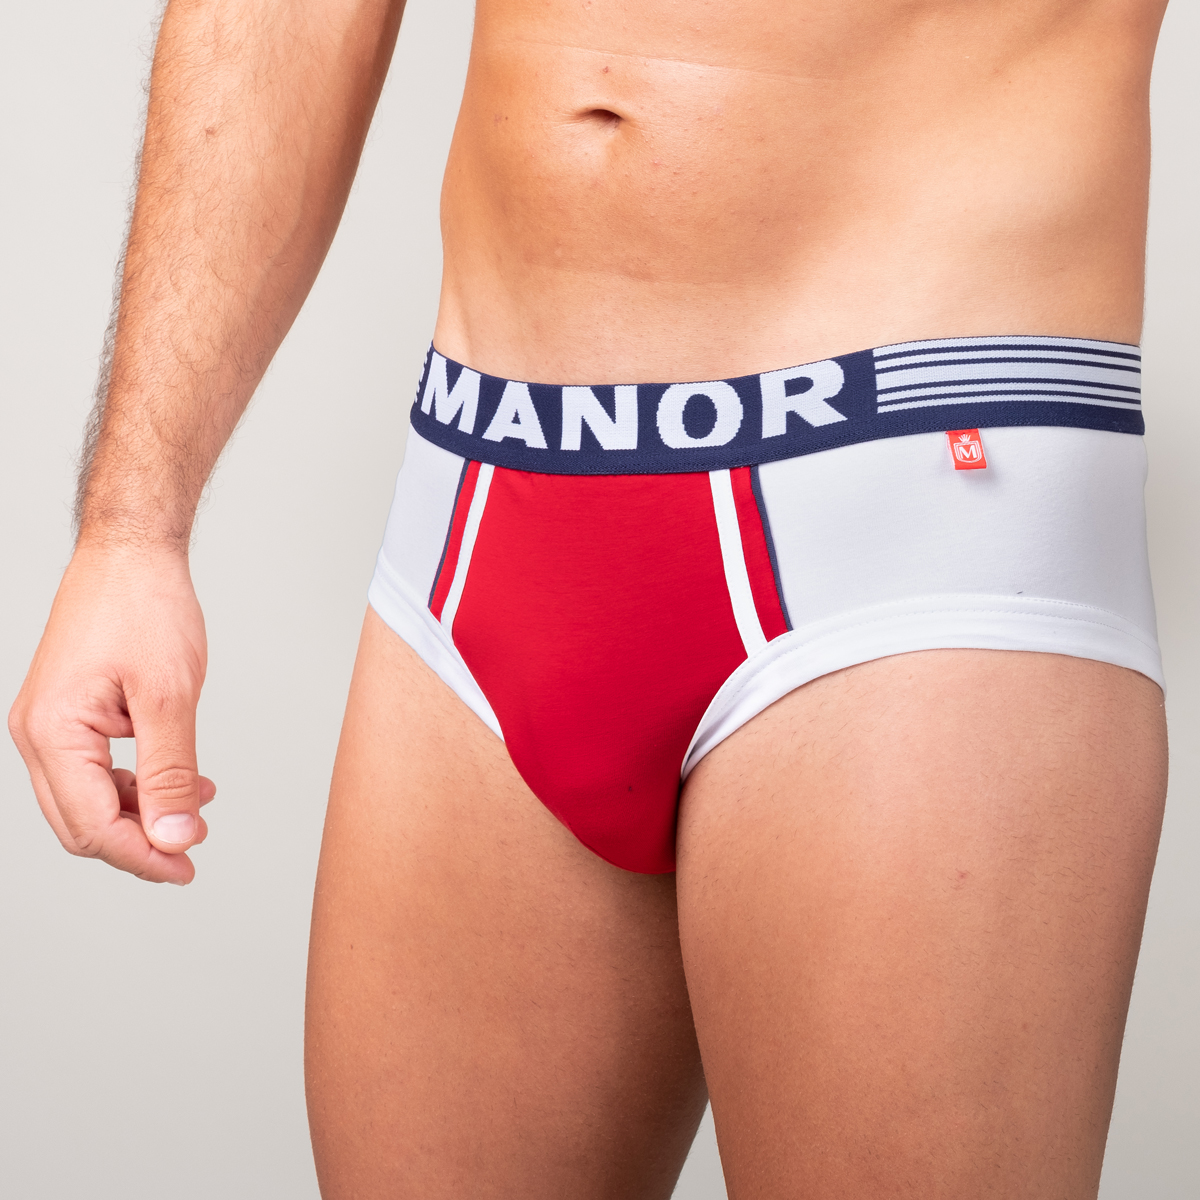 Manor underwear Focus On belo crveni slip 02